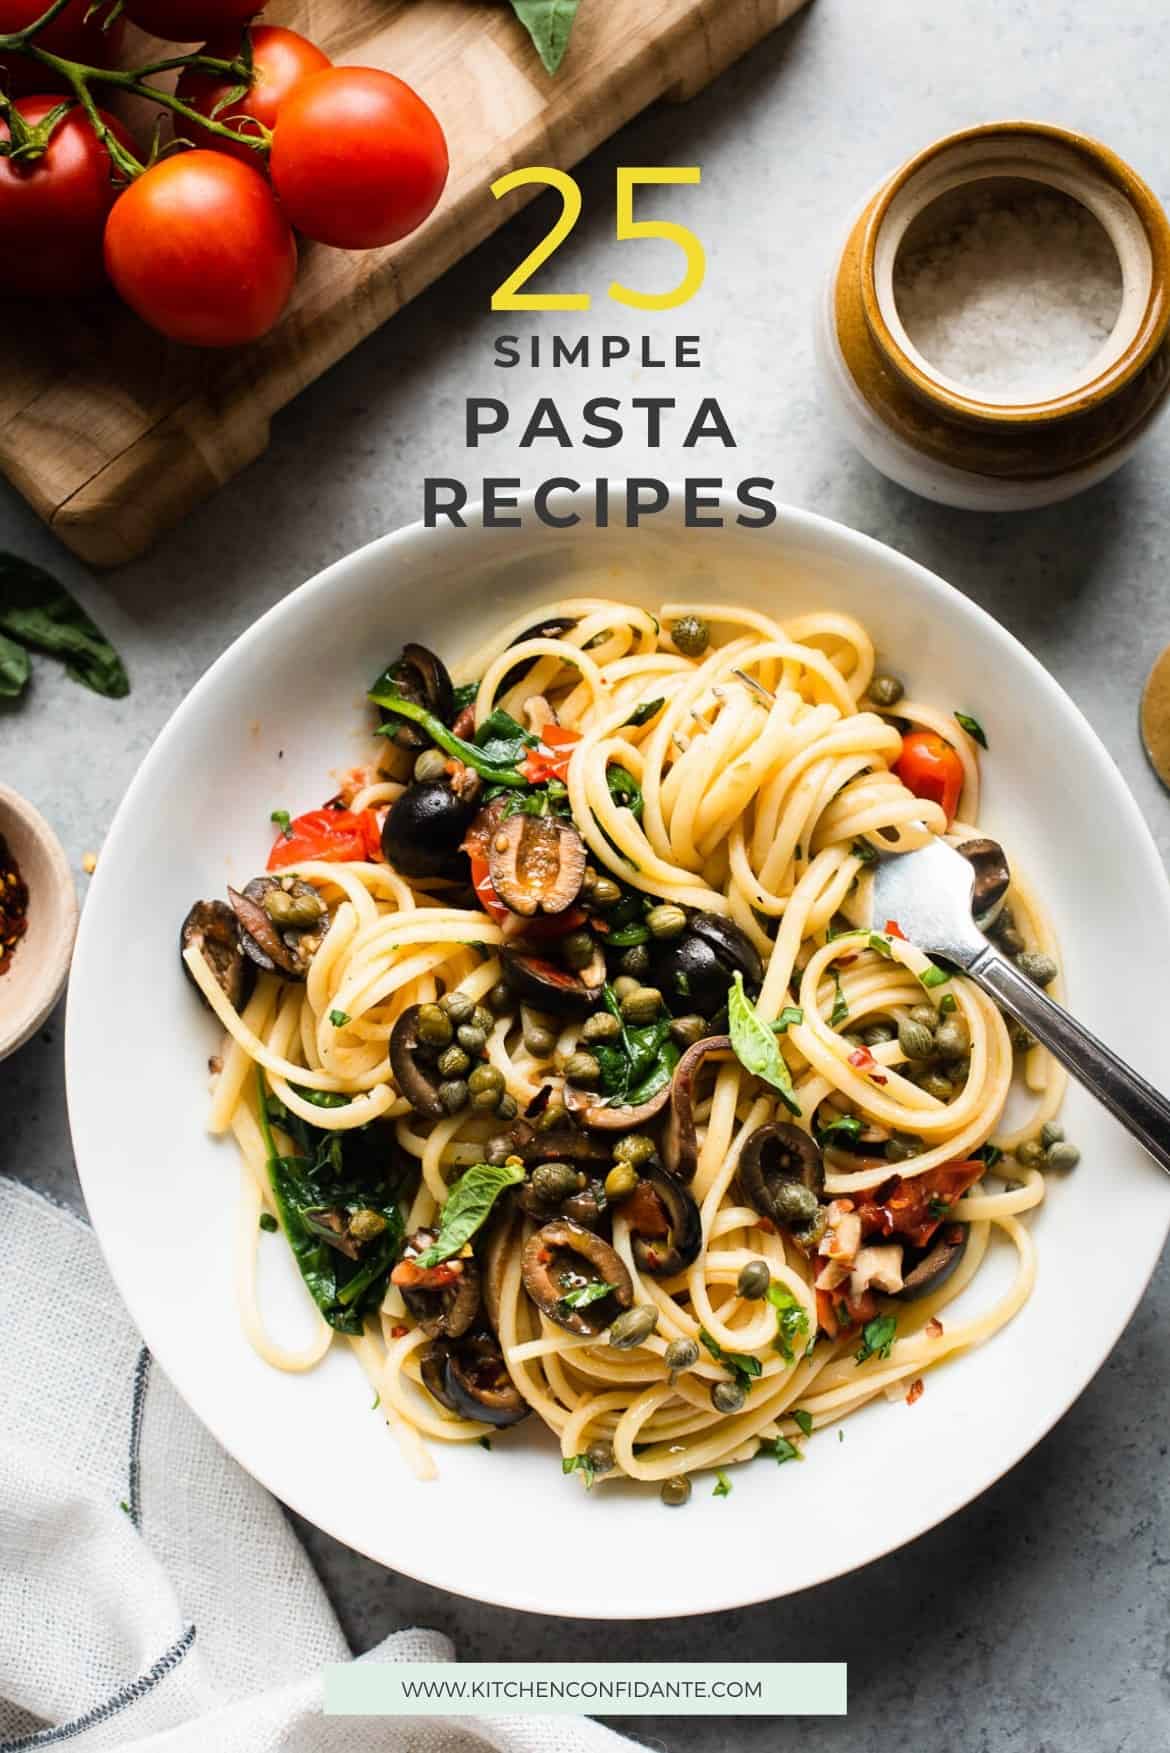 25 Simple Pasta Recipes: Dinners + Salads + Soups - Kitchen Confidante®